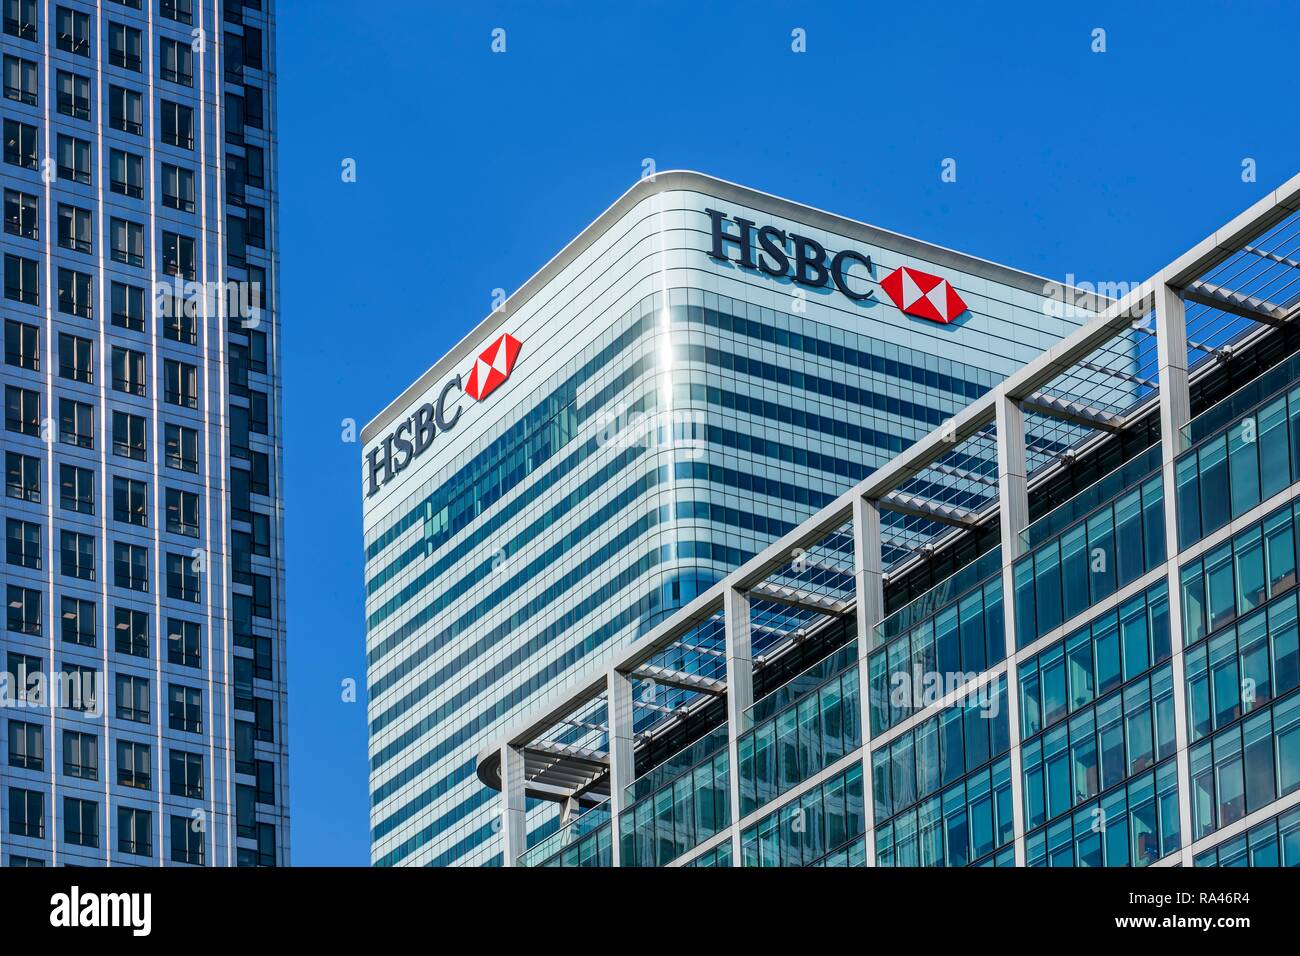 La sede del Banco HSBC, Canary Wharf, Londres, Reino Unido. Foto de stock